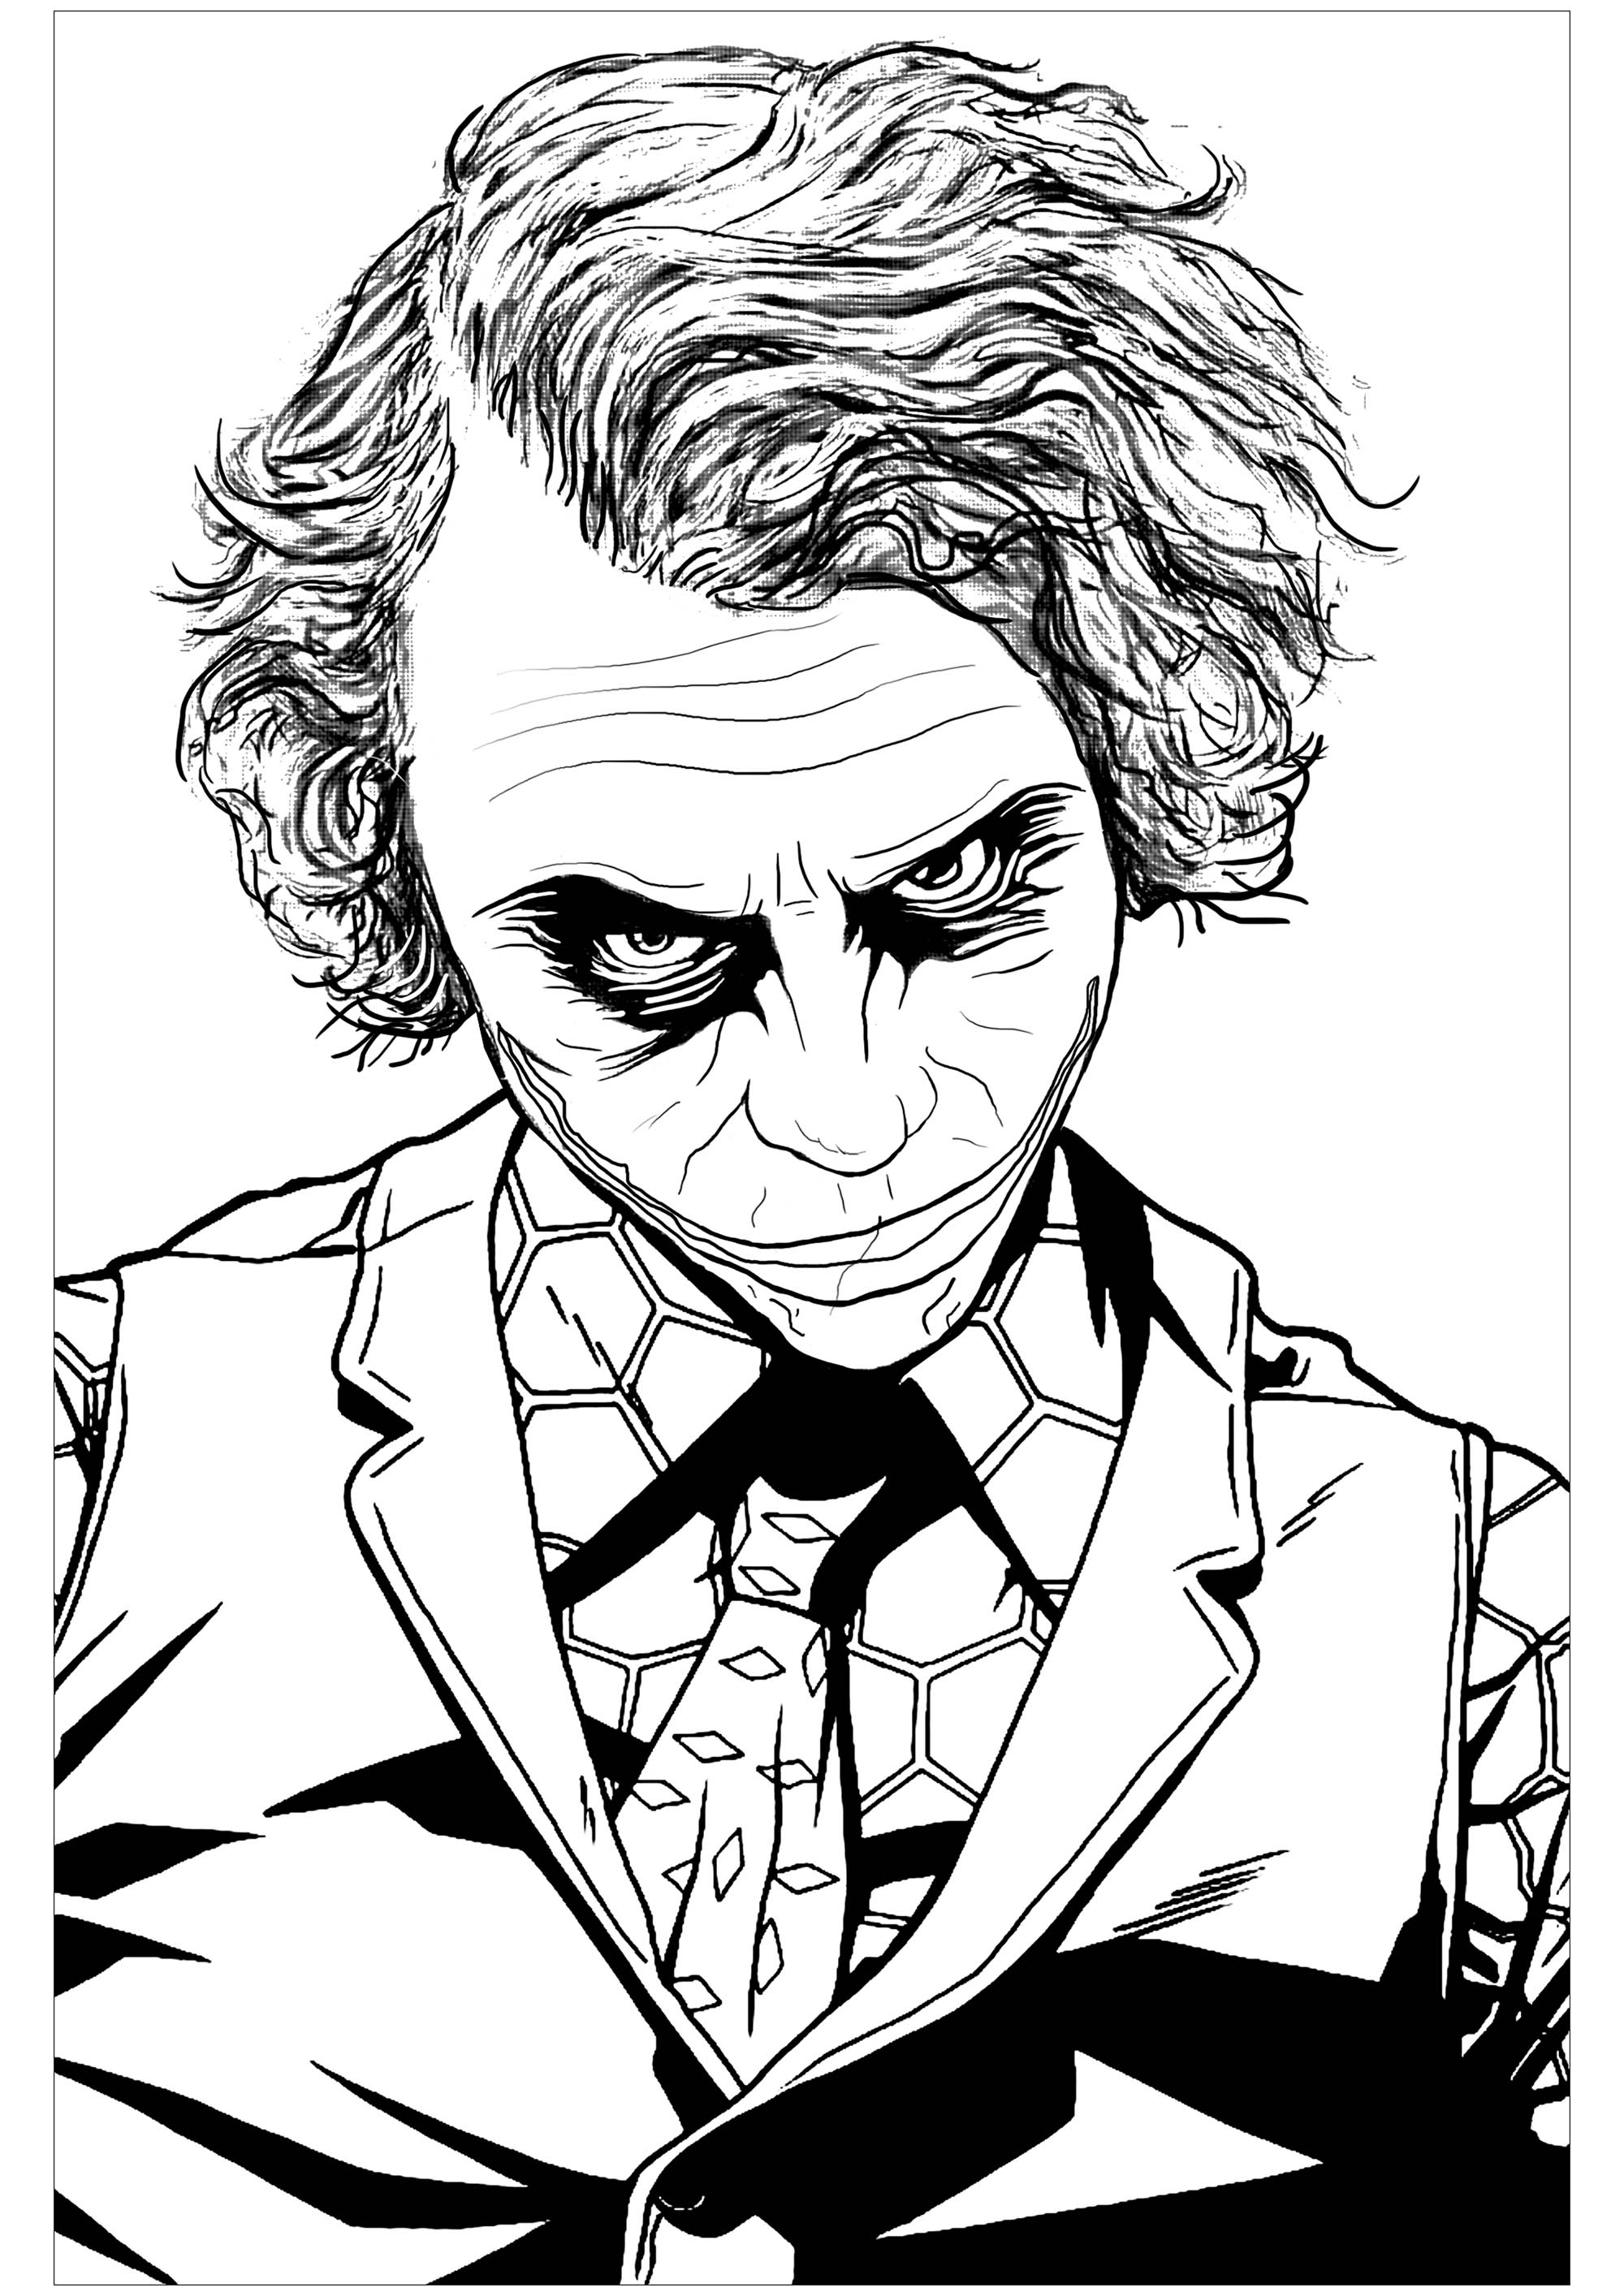 Heath Ledger Joker Coloring Pages